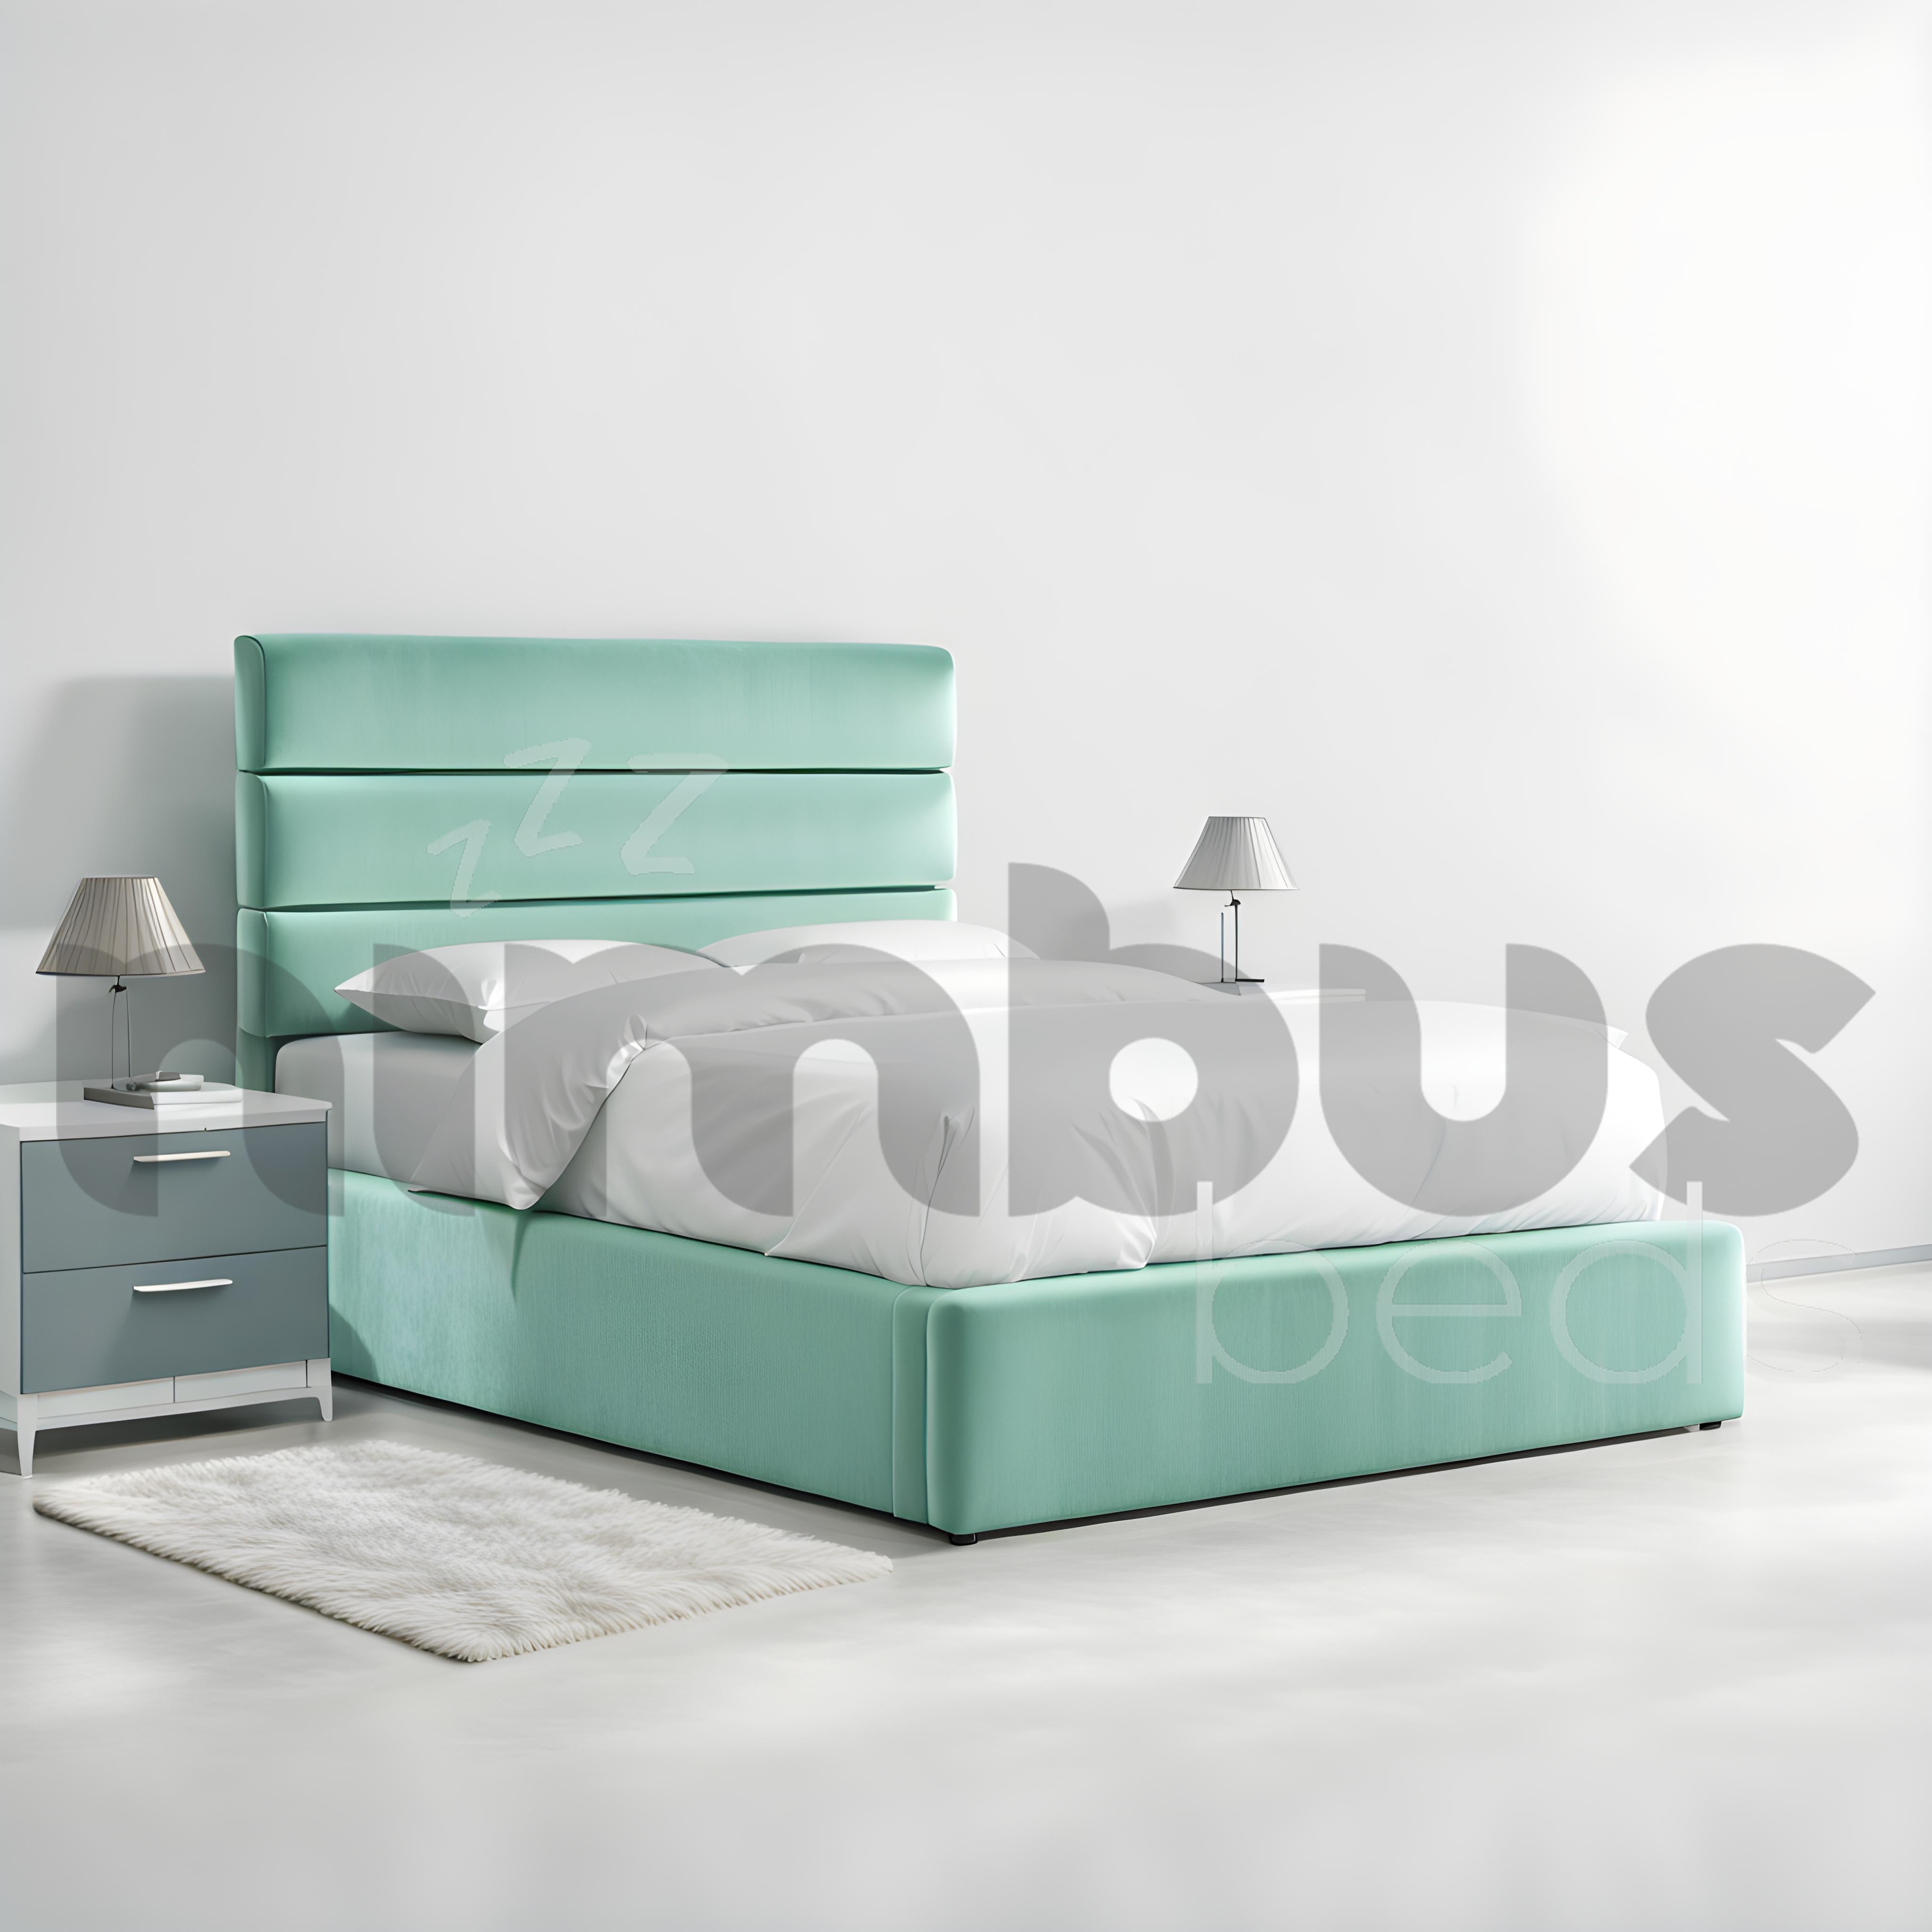 Three Horizontal panels bed frame - Nimbus Beds